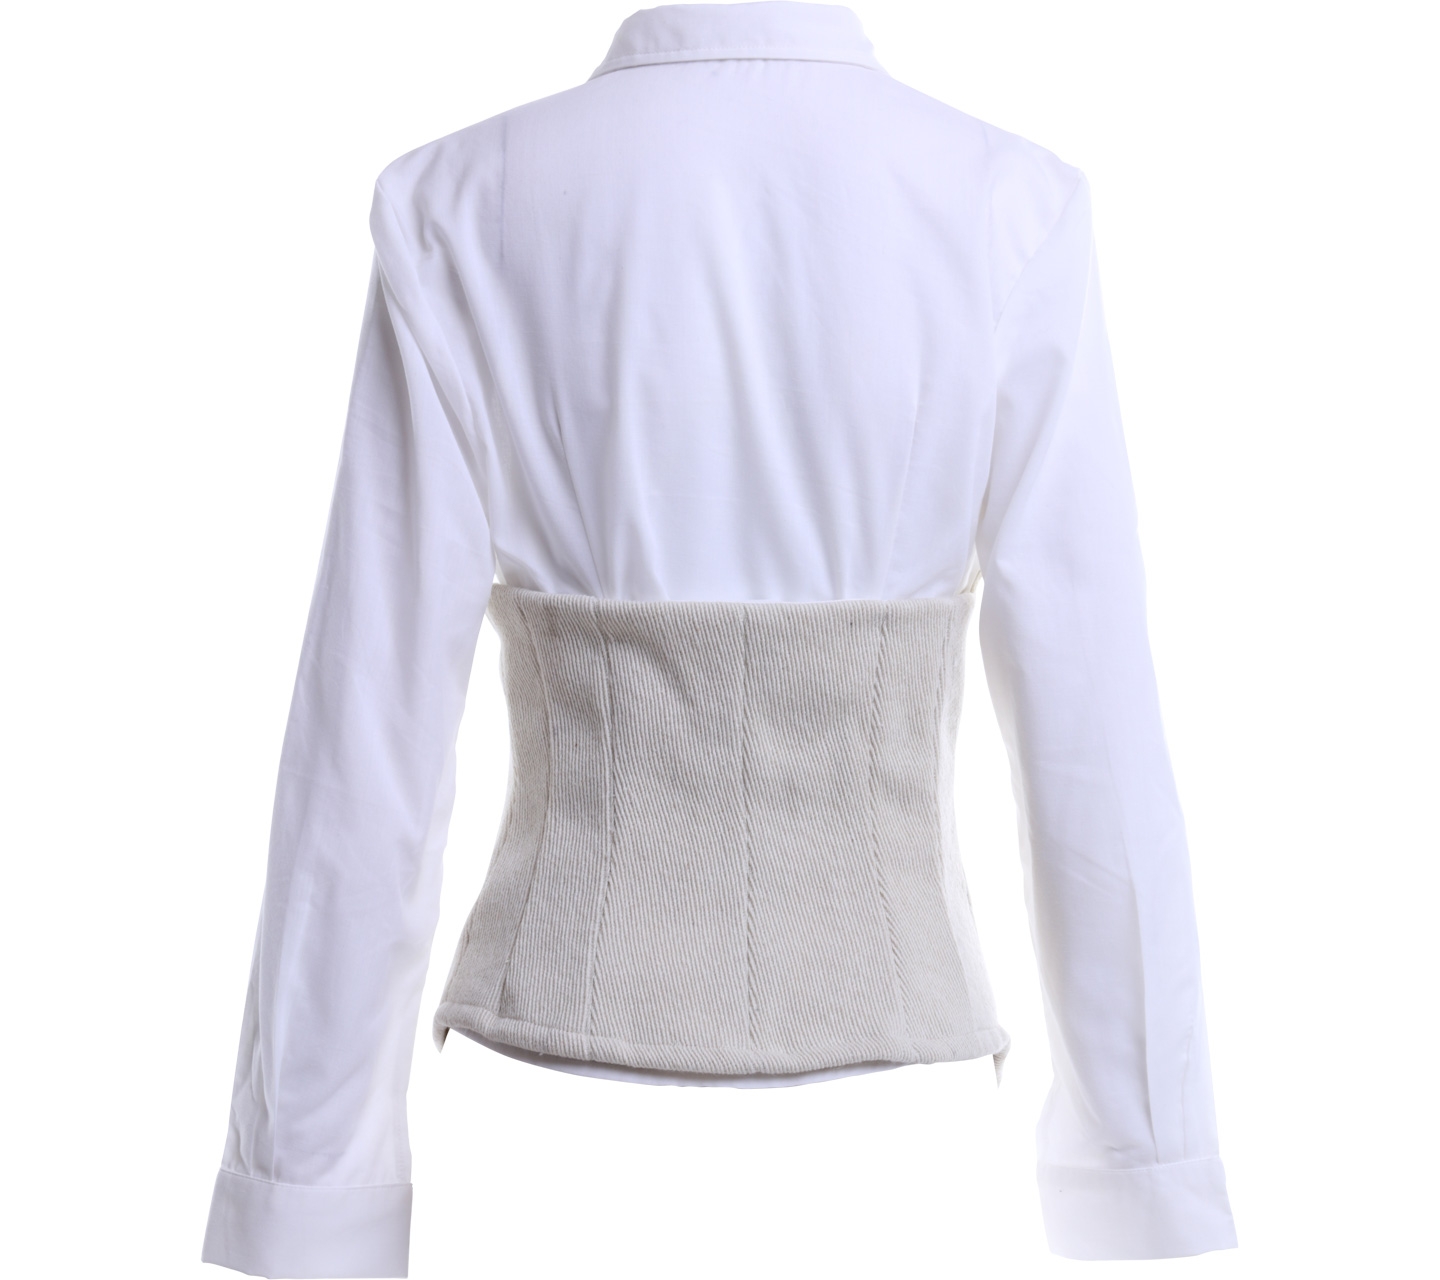 Alto White Long Sleeve with Corset Shirt